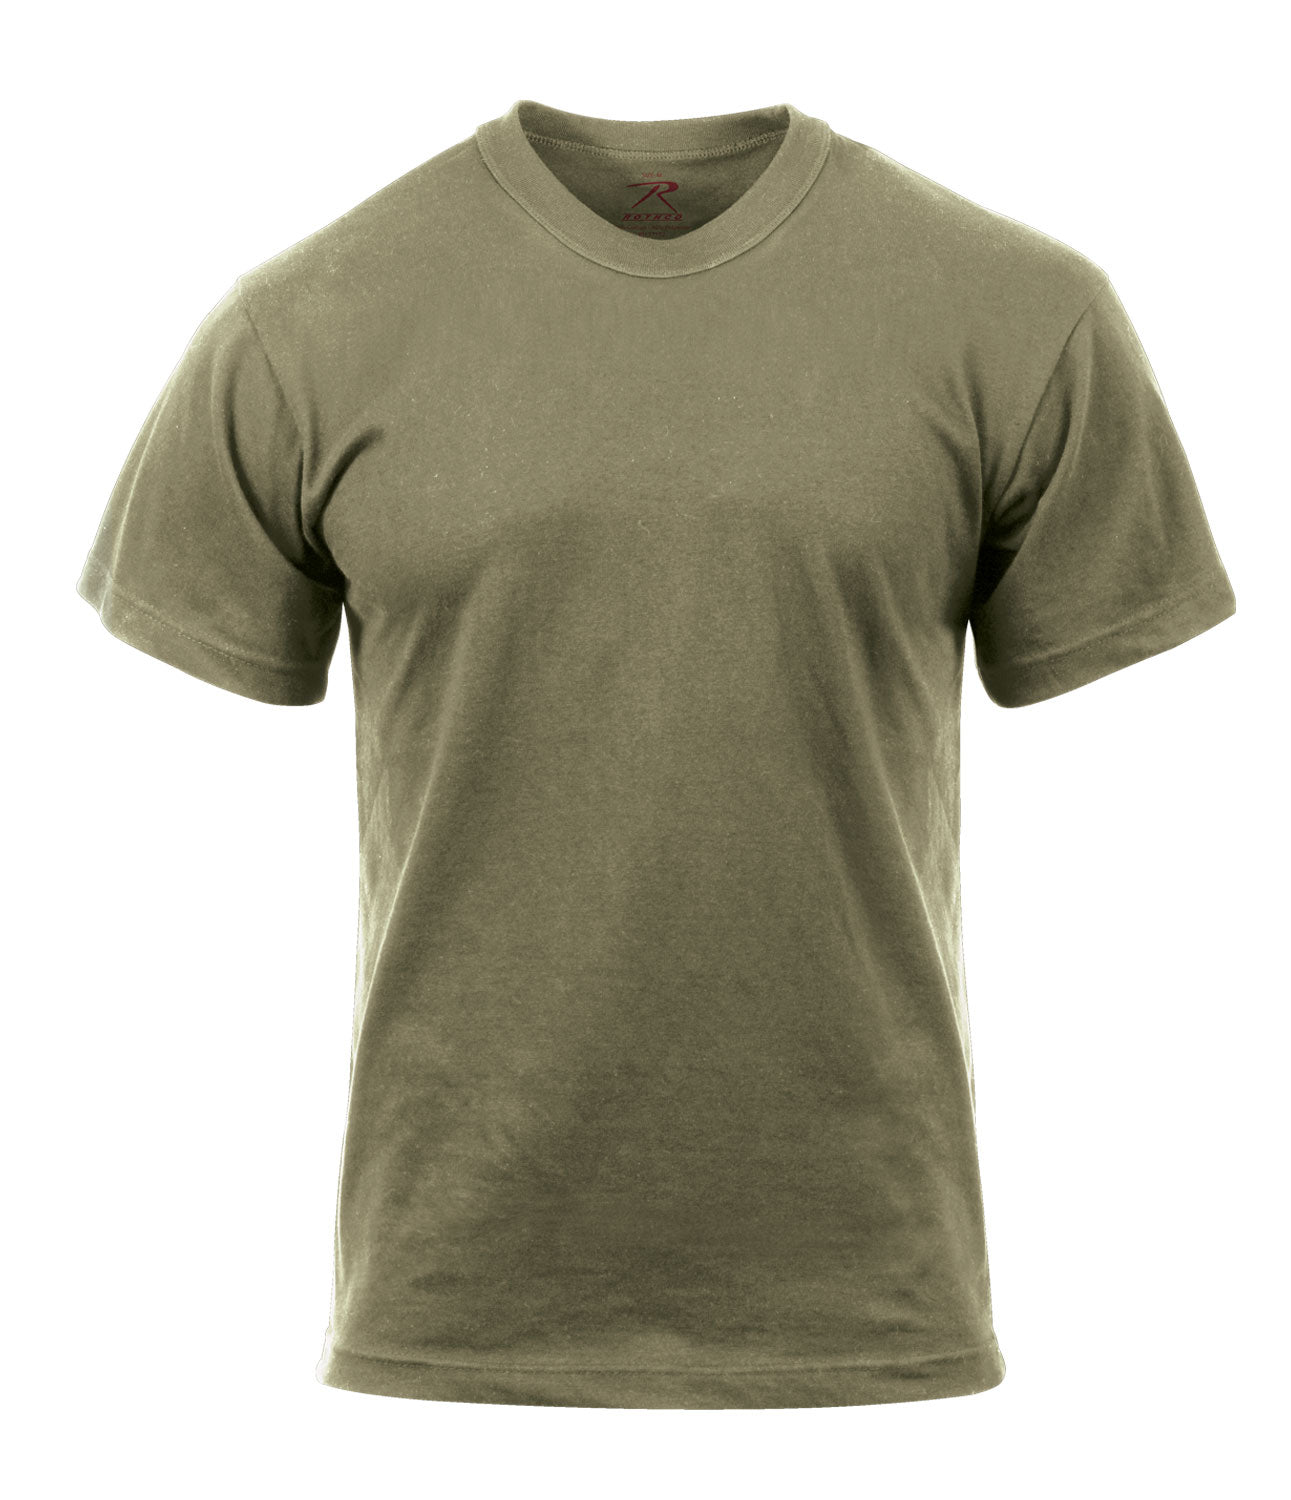 Rothco AR 670-1 Coyote Brown 100% Cotton T-Shirt